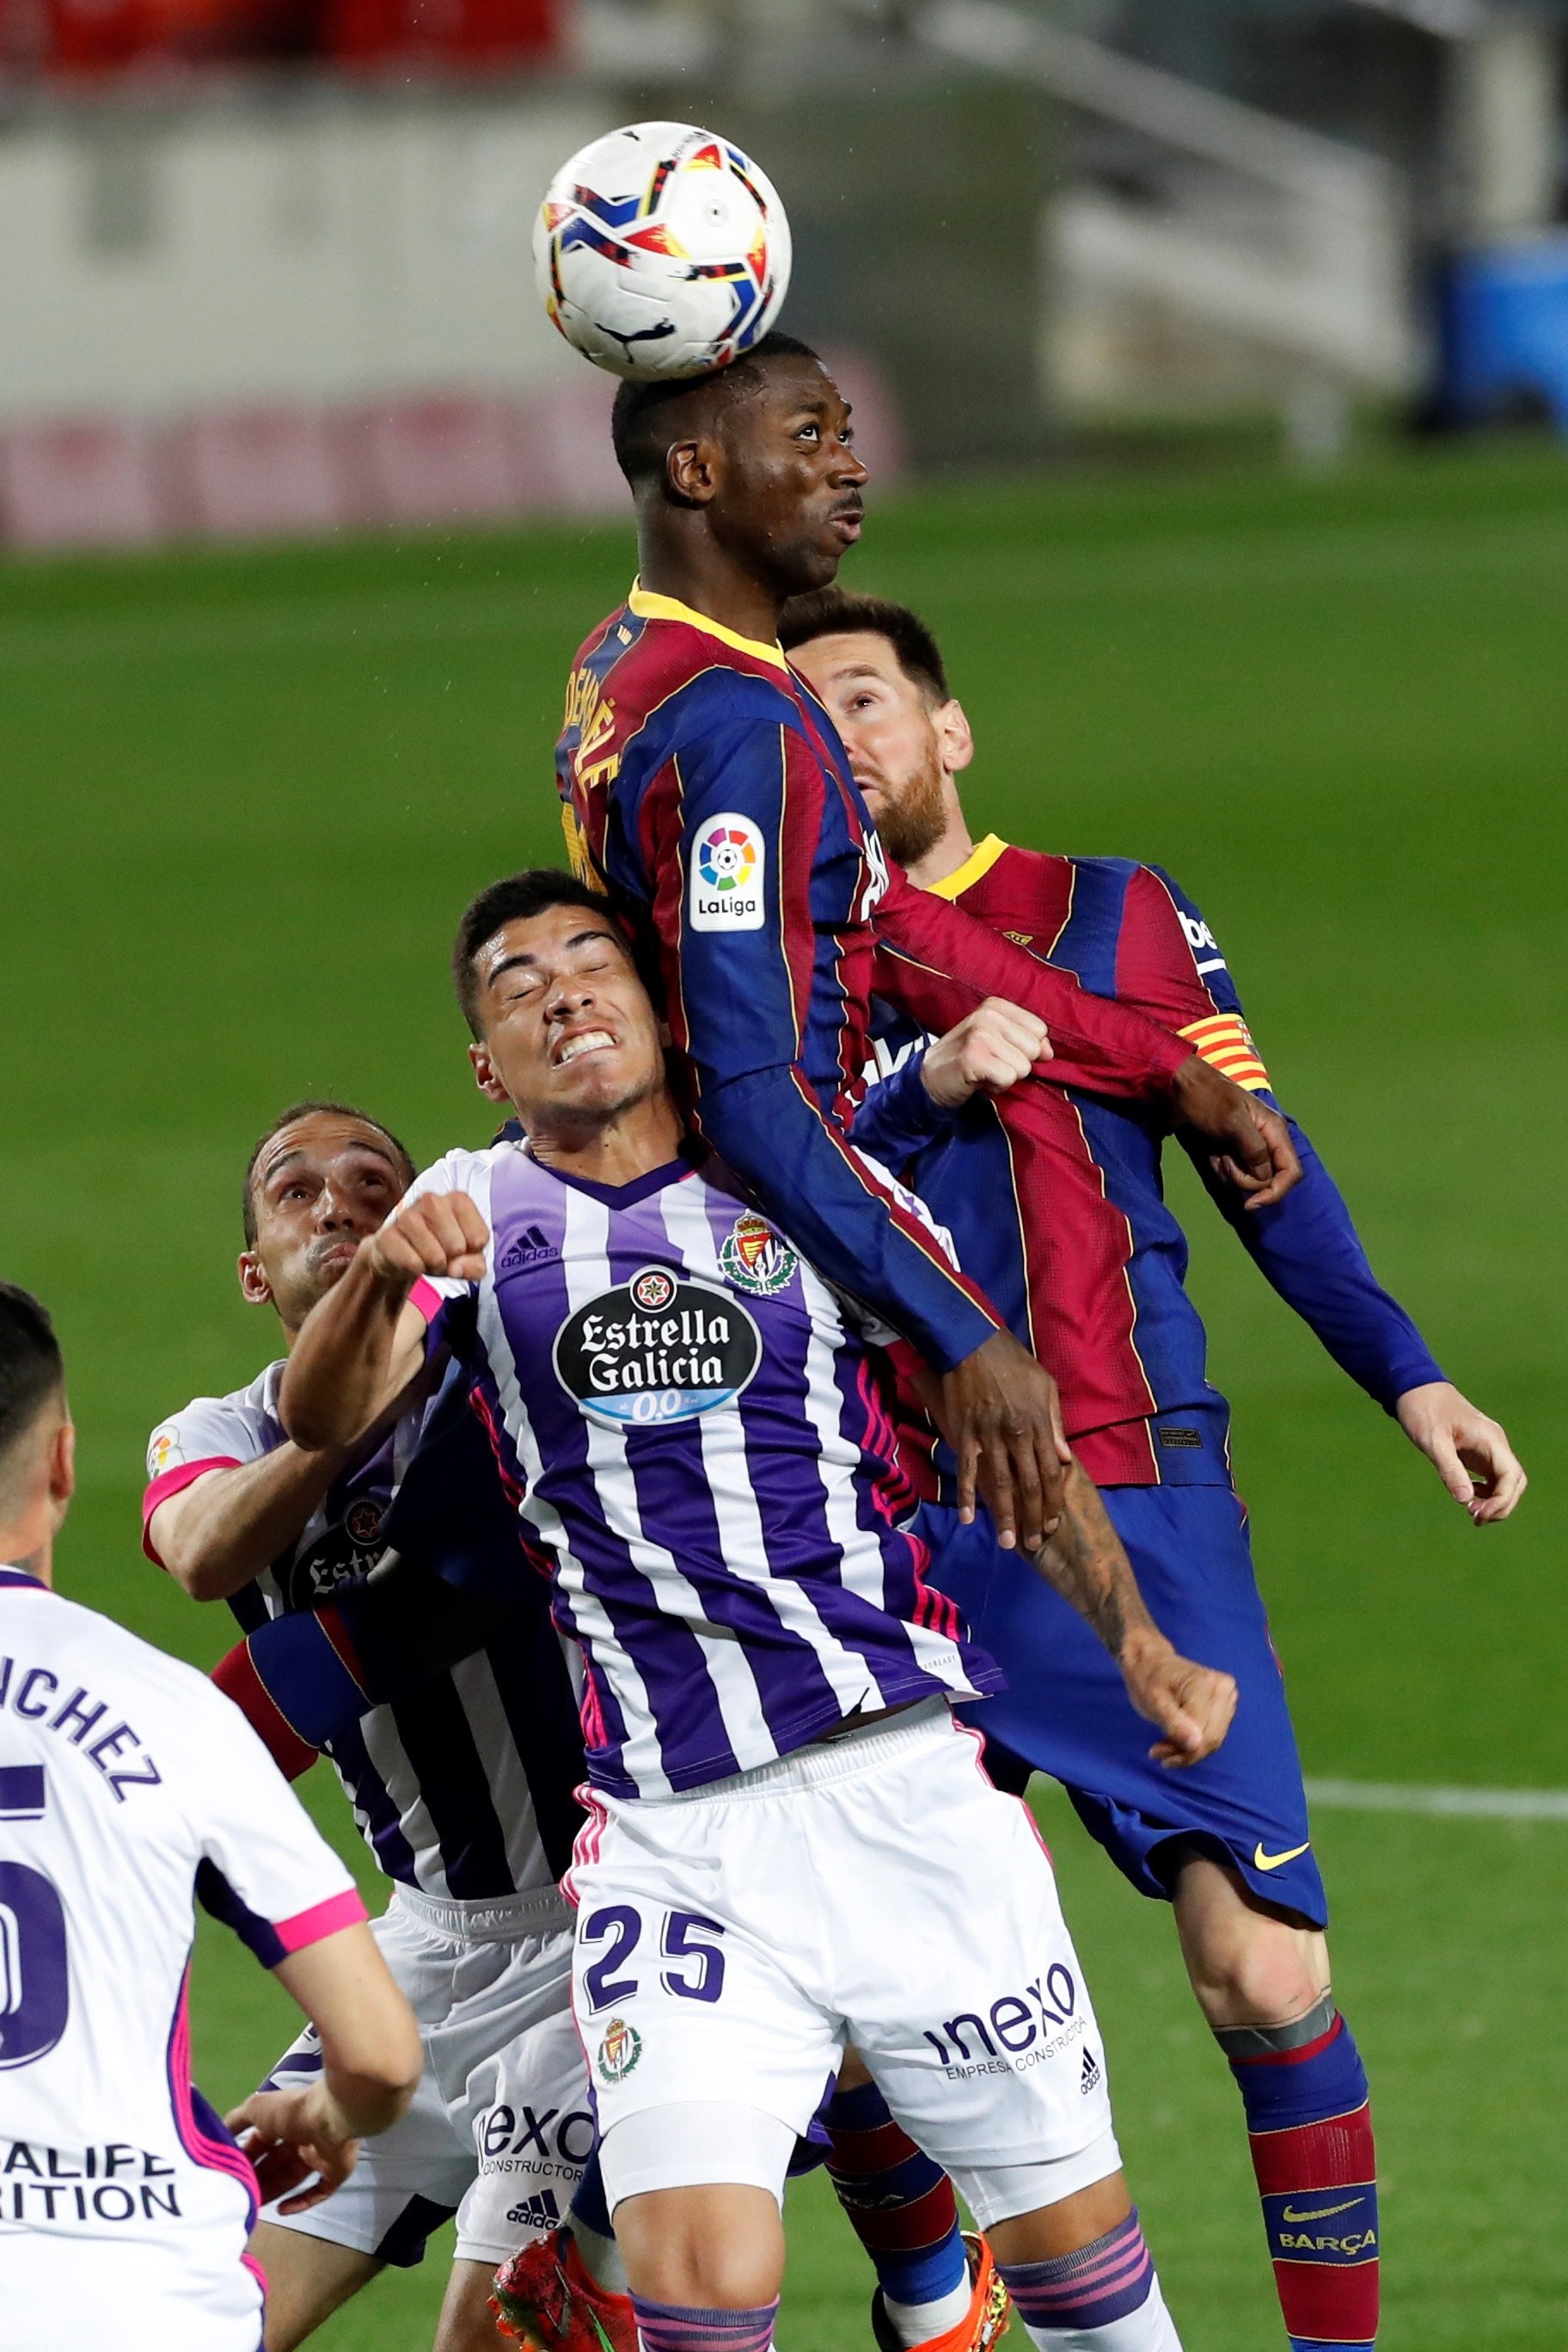 Barça-Valladolid de la Lliga Santander: resultat, resum i gols